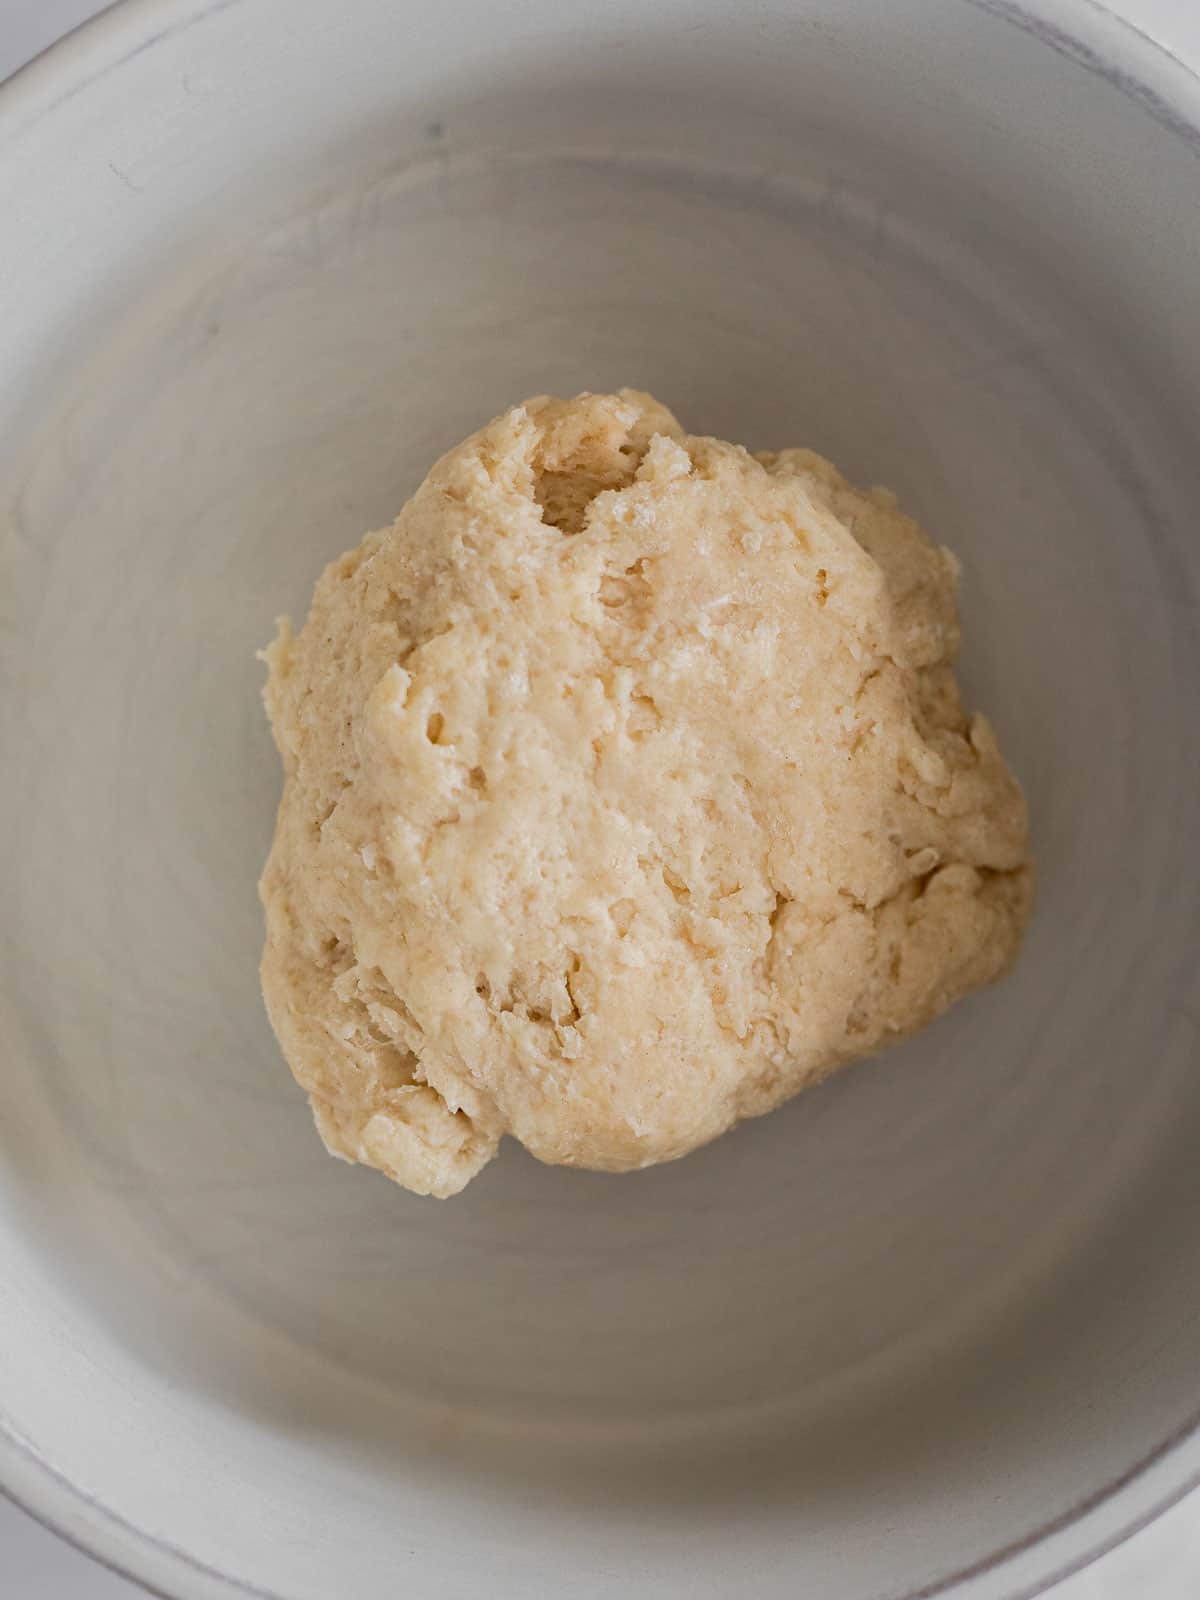 dough for a single cinnamon roll in a white bowl.